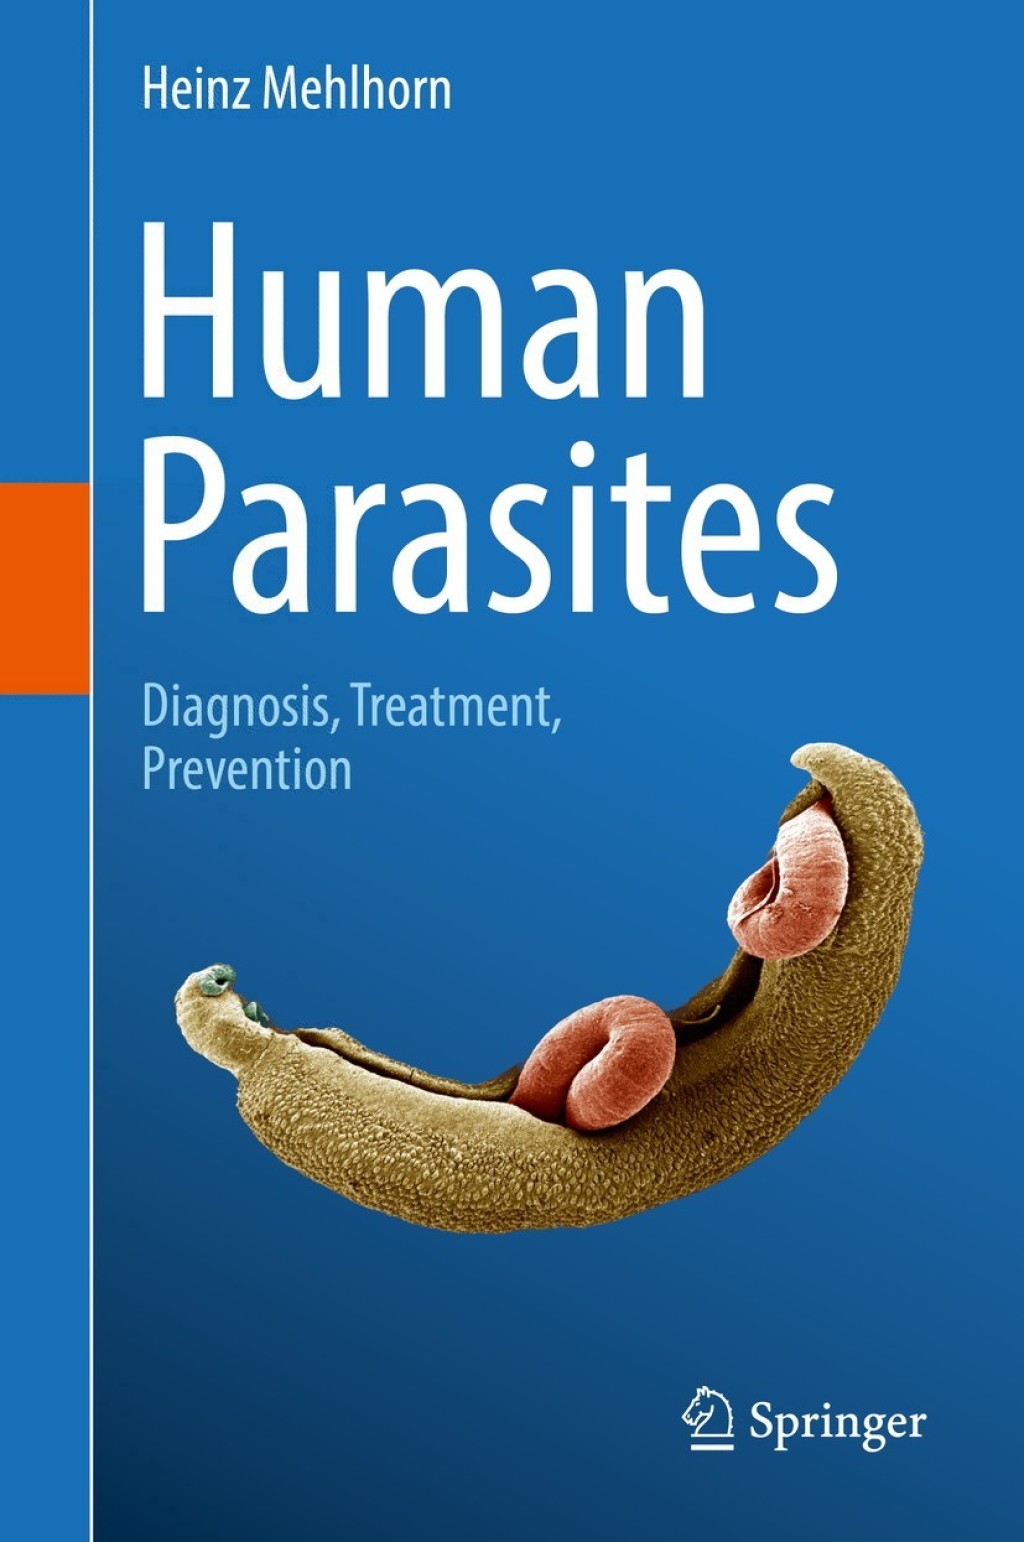 ISBN 9783319328010 product image for Human Parasites (eBook Rental) | upcitemdb.com